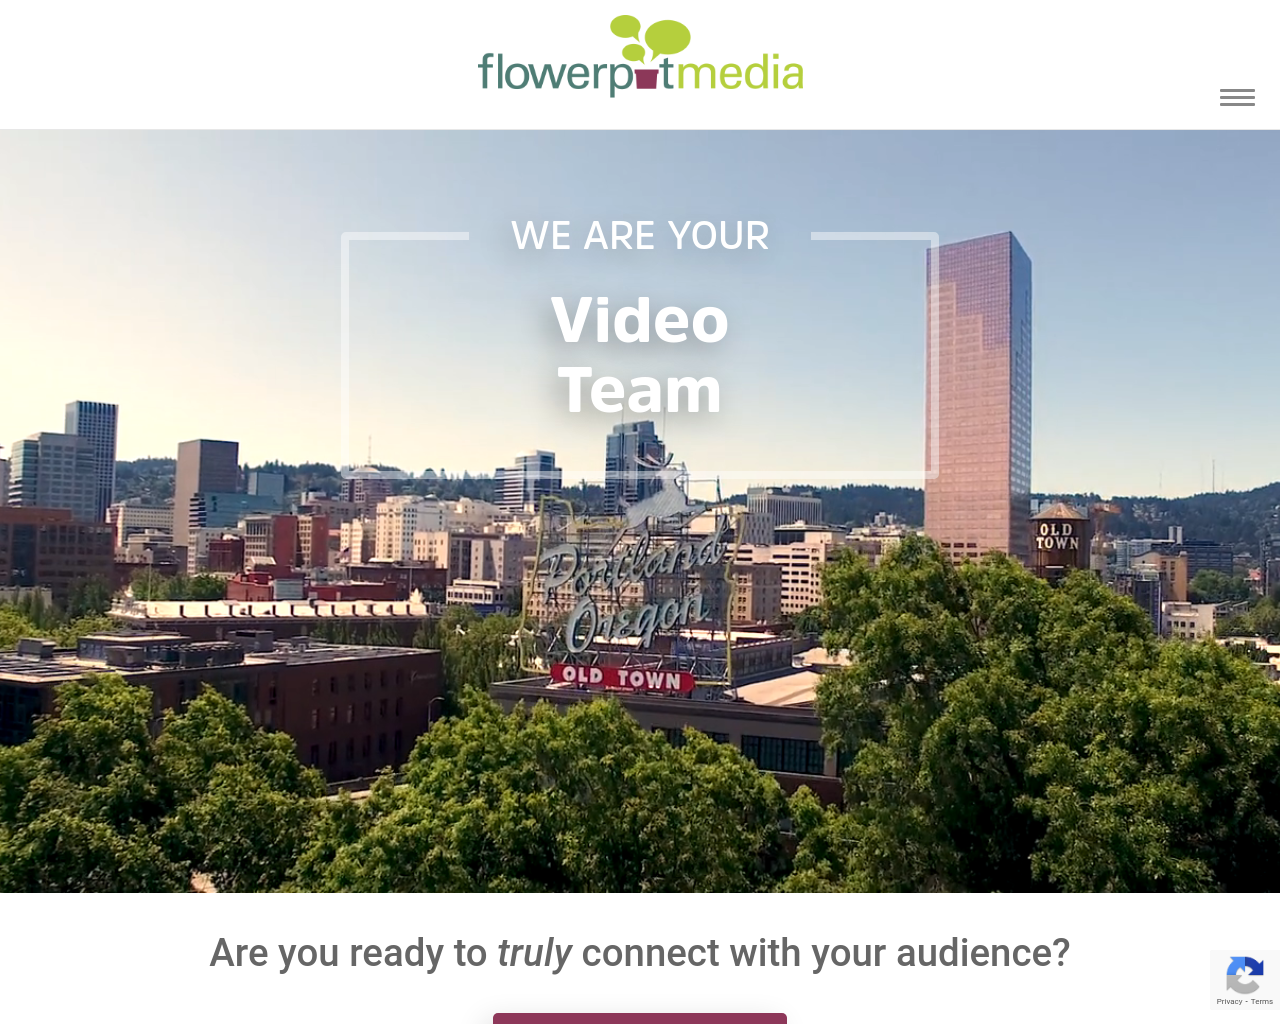 flowerpotmedia.com